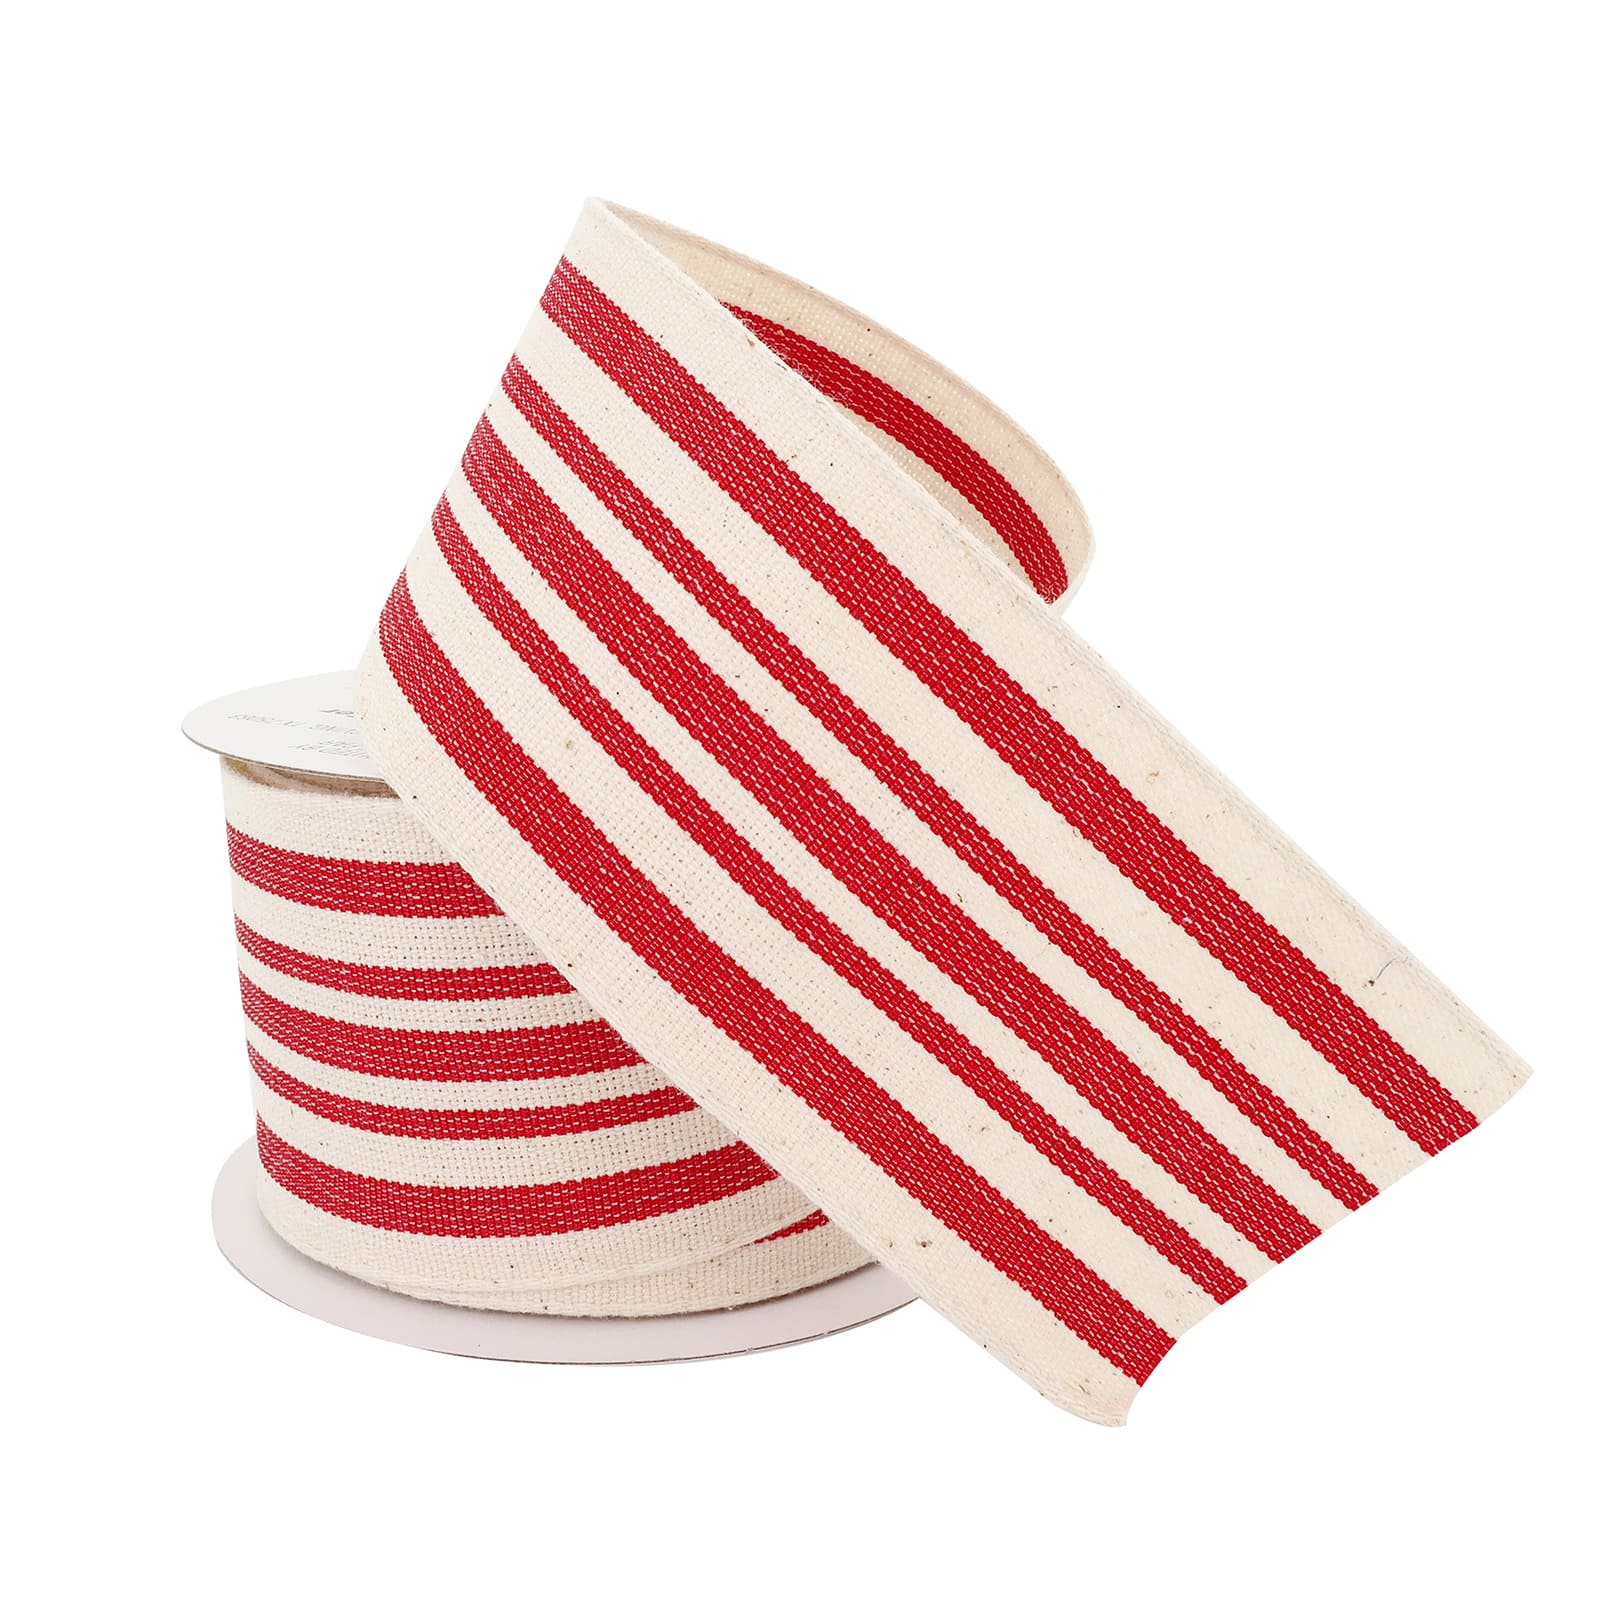 2.5&#x22; Red &#x26; Ivory Stripe Faux Cotton Wired Ribbon by Celebrate It&#x2122;